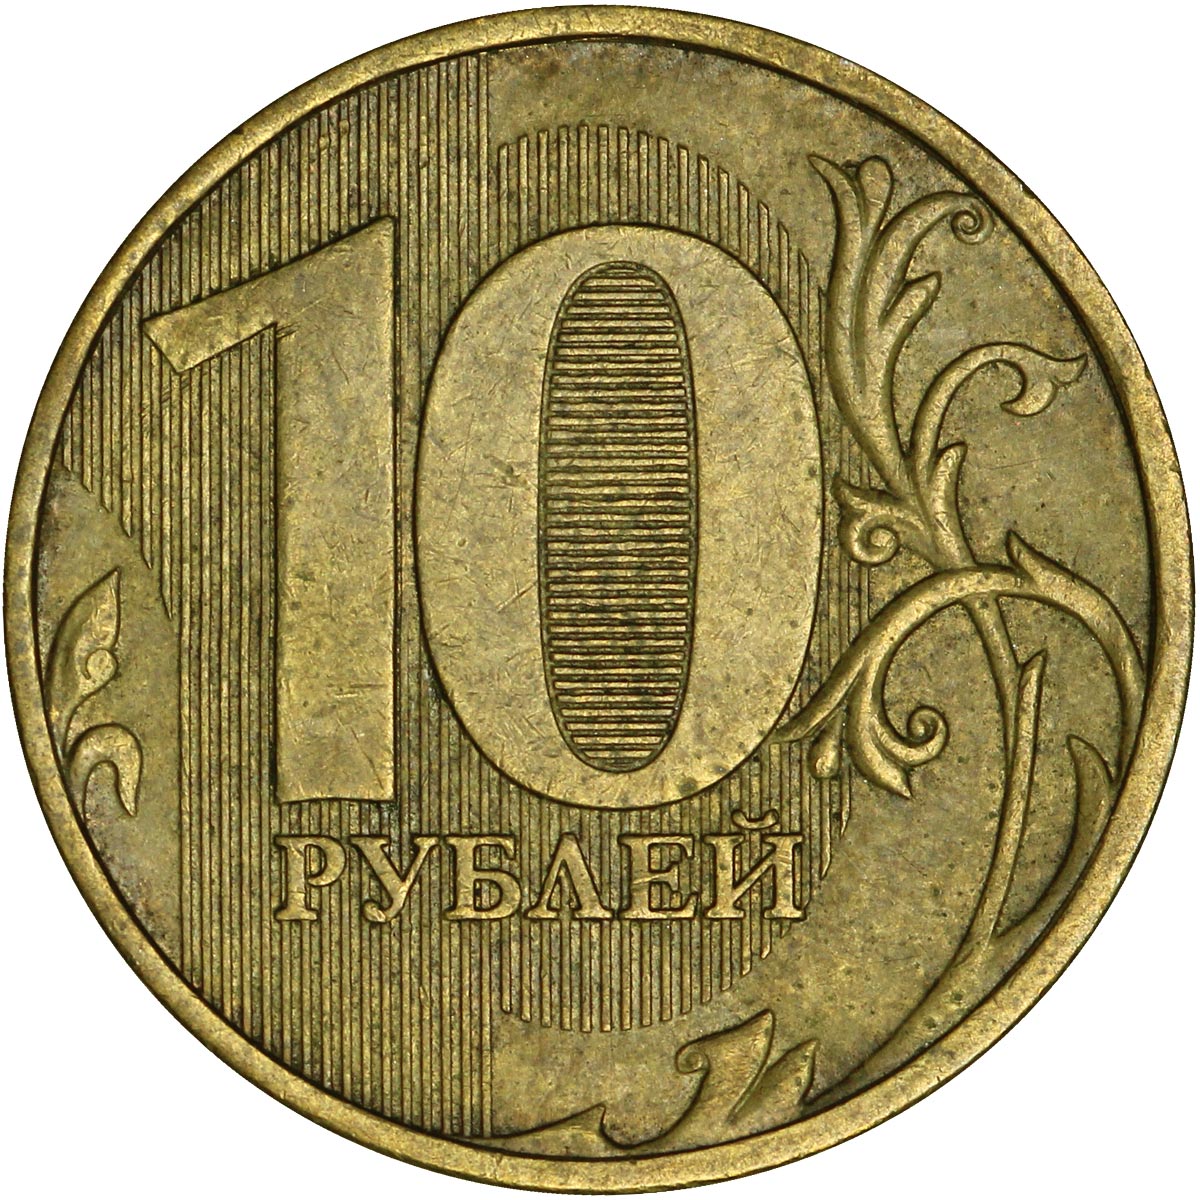 Steam рубли по 10 рублей фото 68